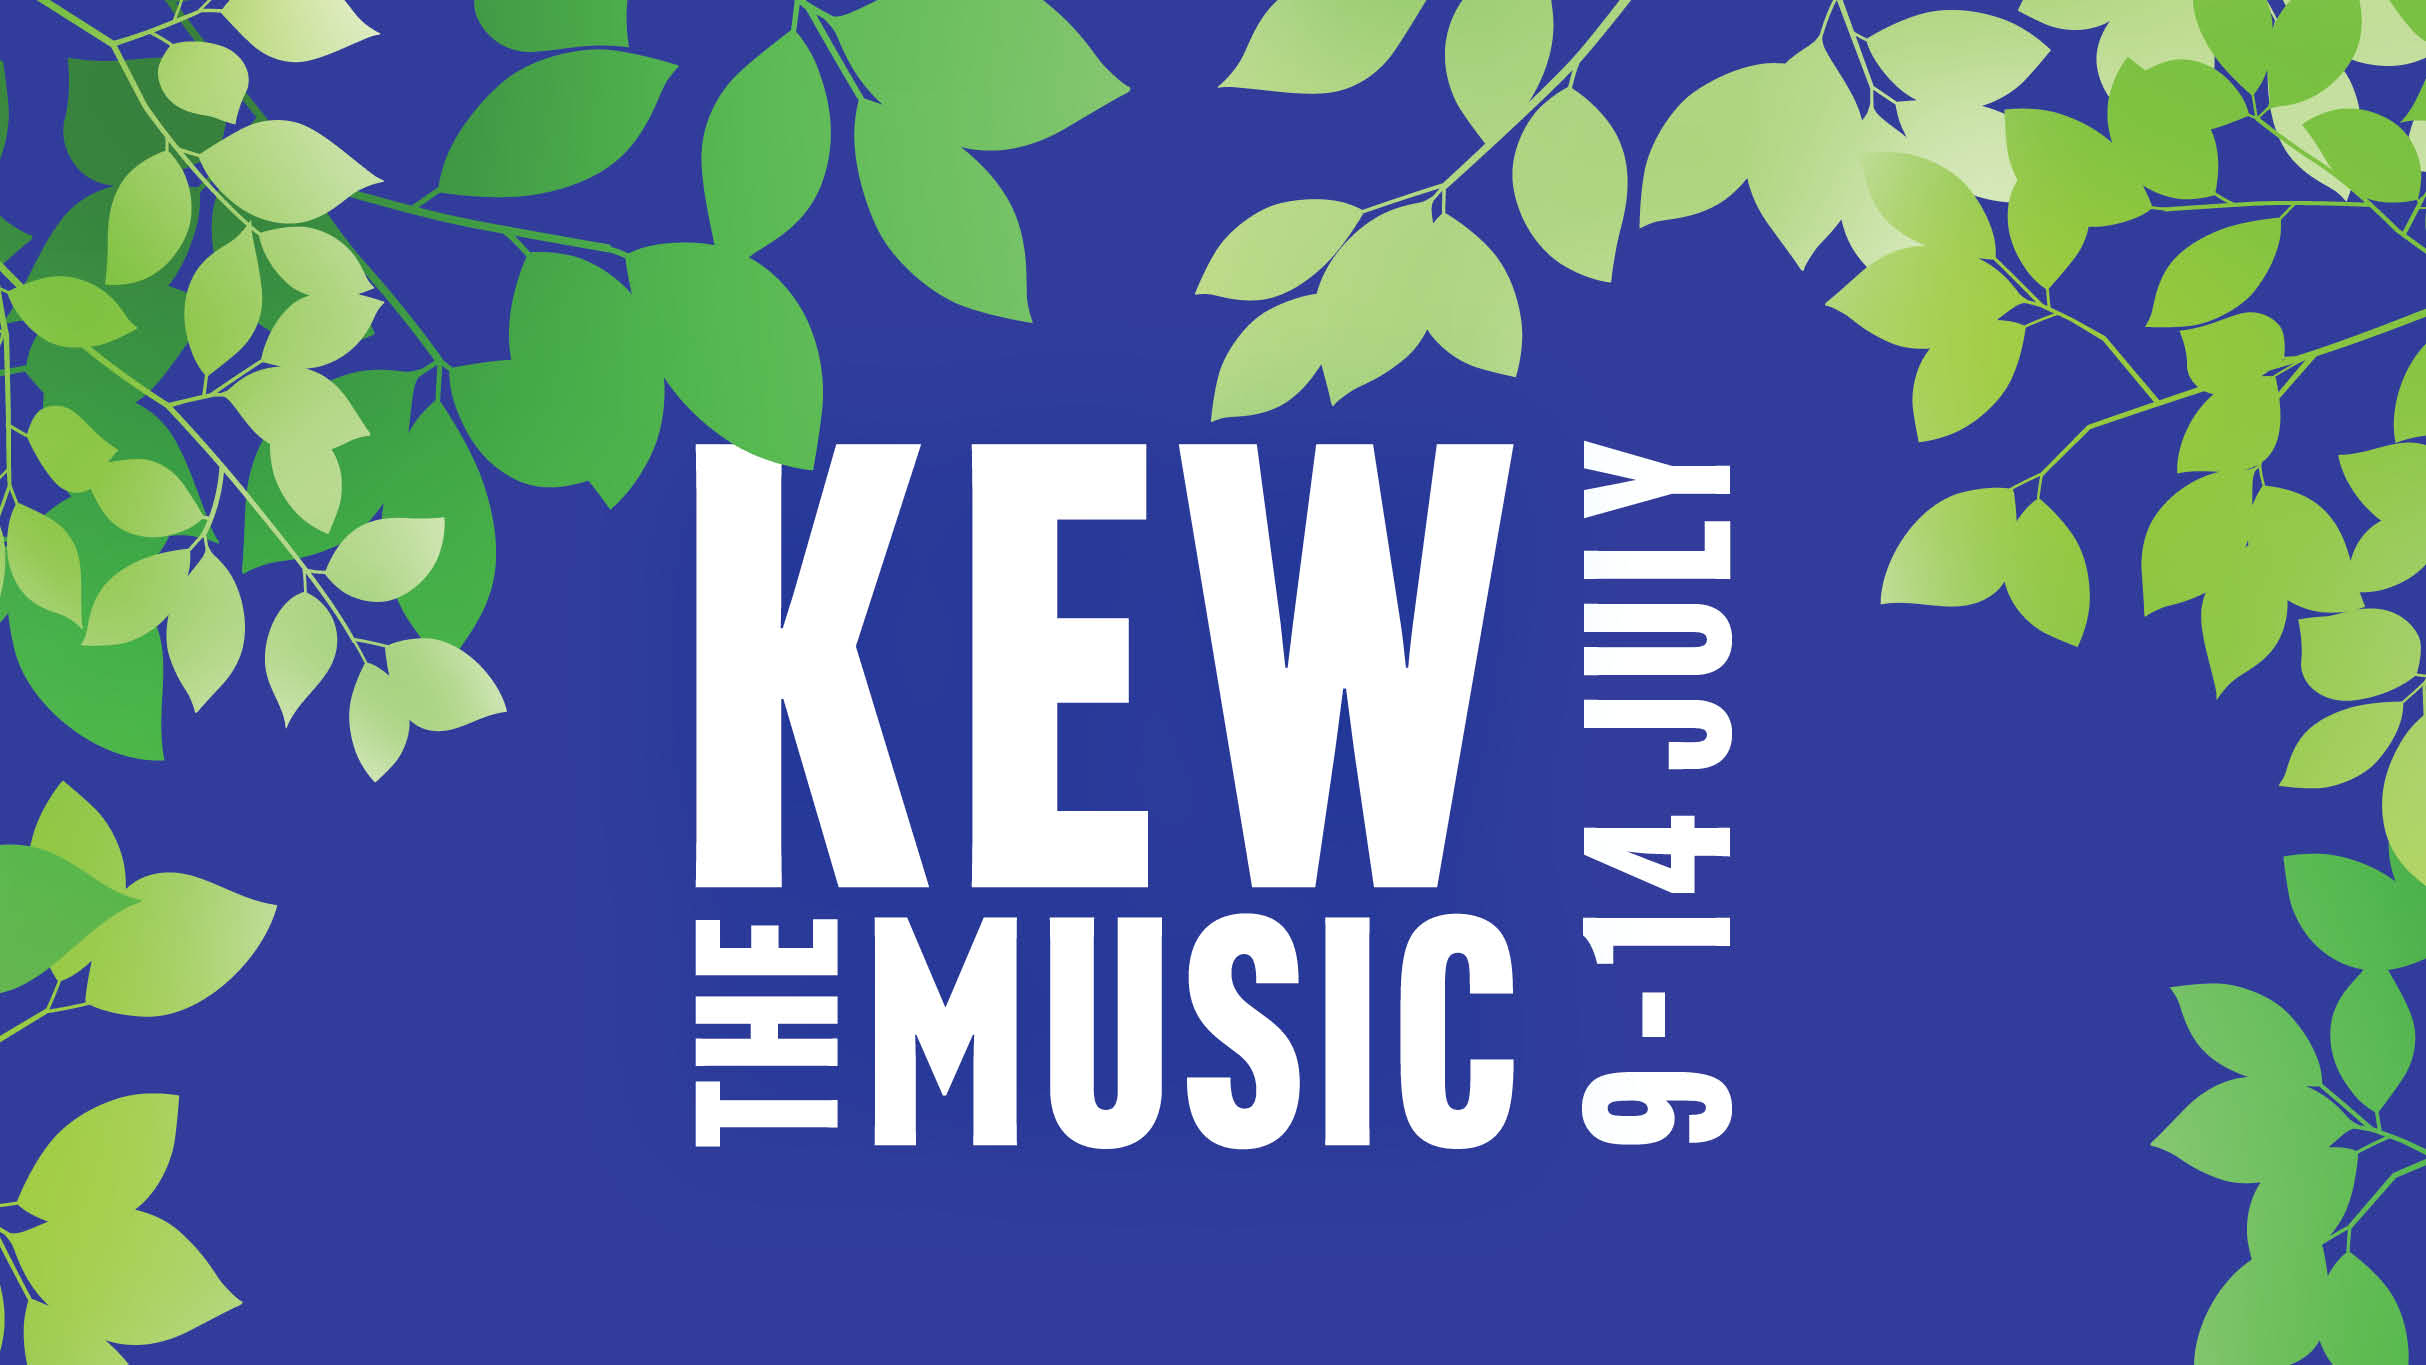 Kew The Music - MIKA